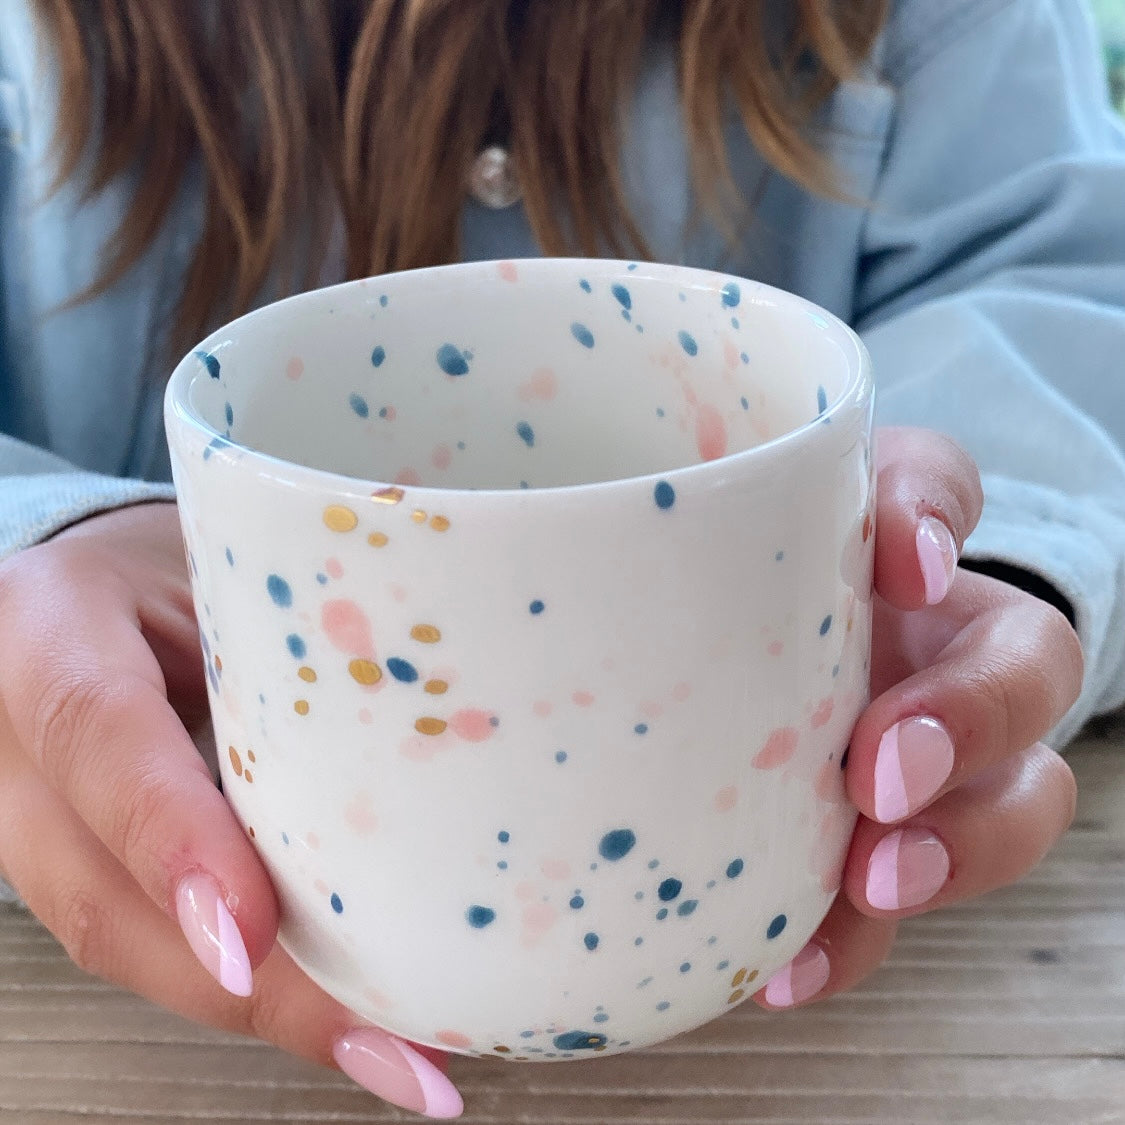 Marinski Heartmade cappuccino cup speckles - gold, pink coral, blush, dark blue